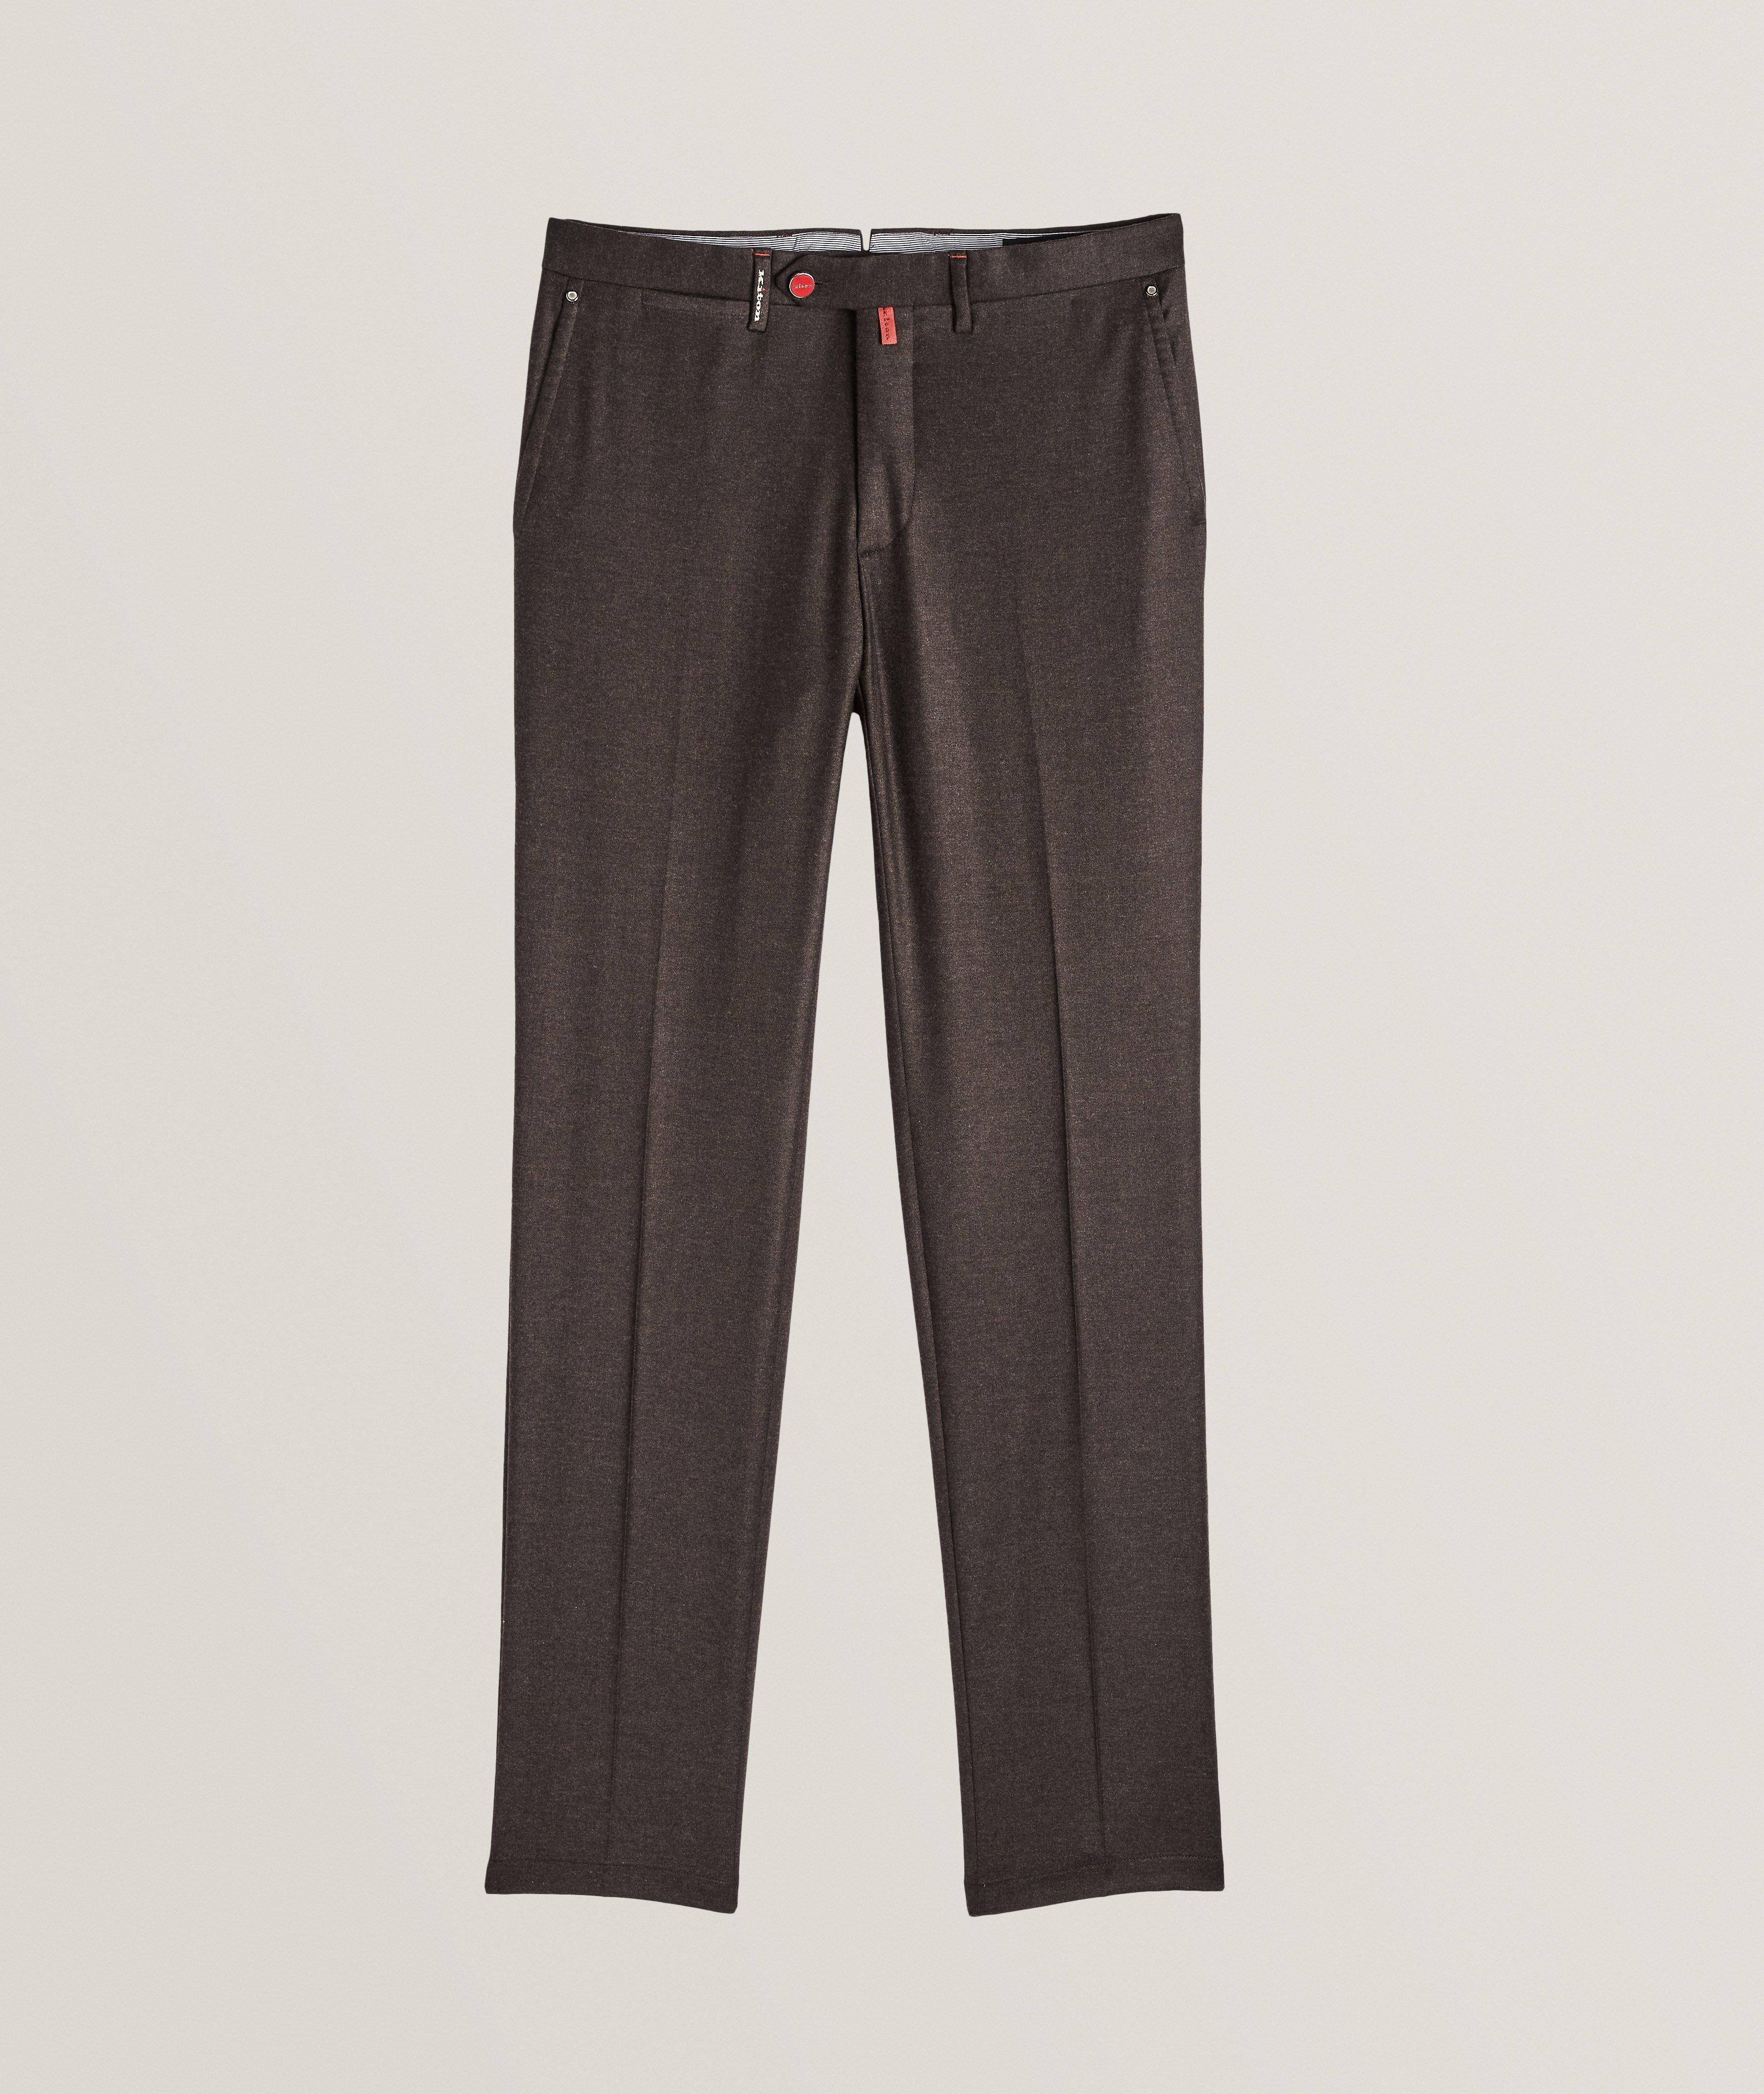 Virgin Wool, Cashmere & Polyamide-Stretch Blend Sport Pants image 0